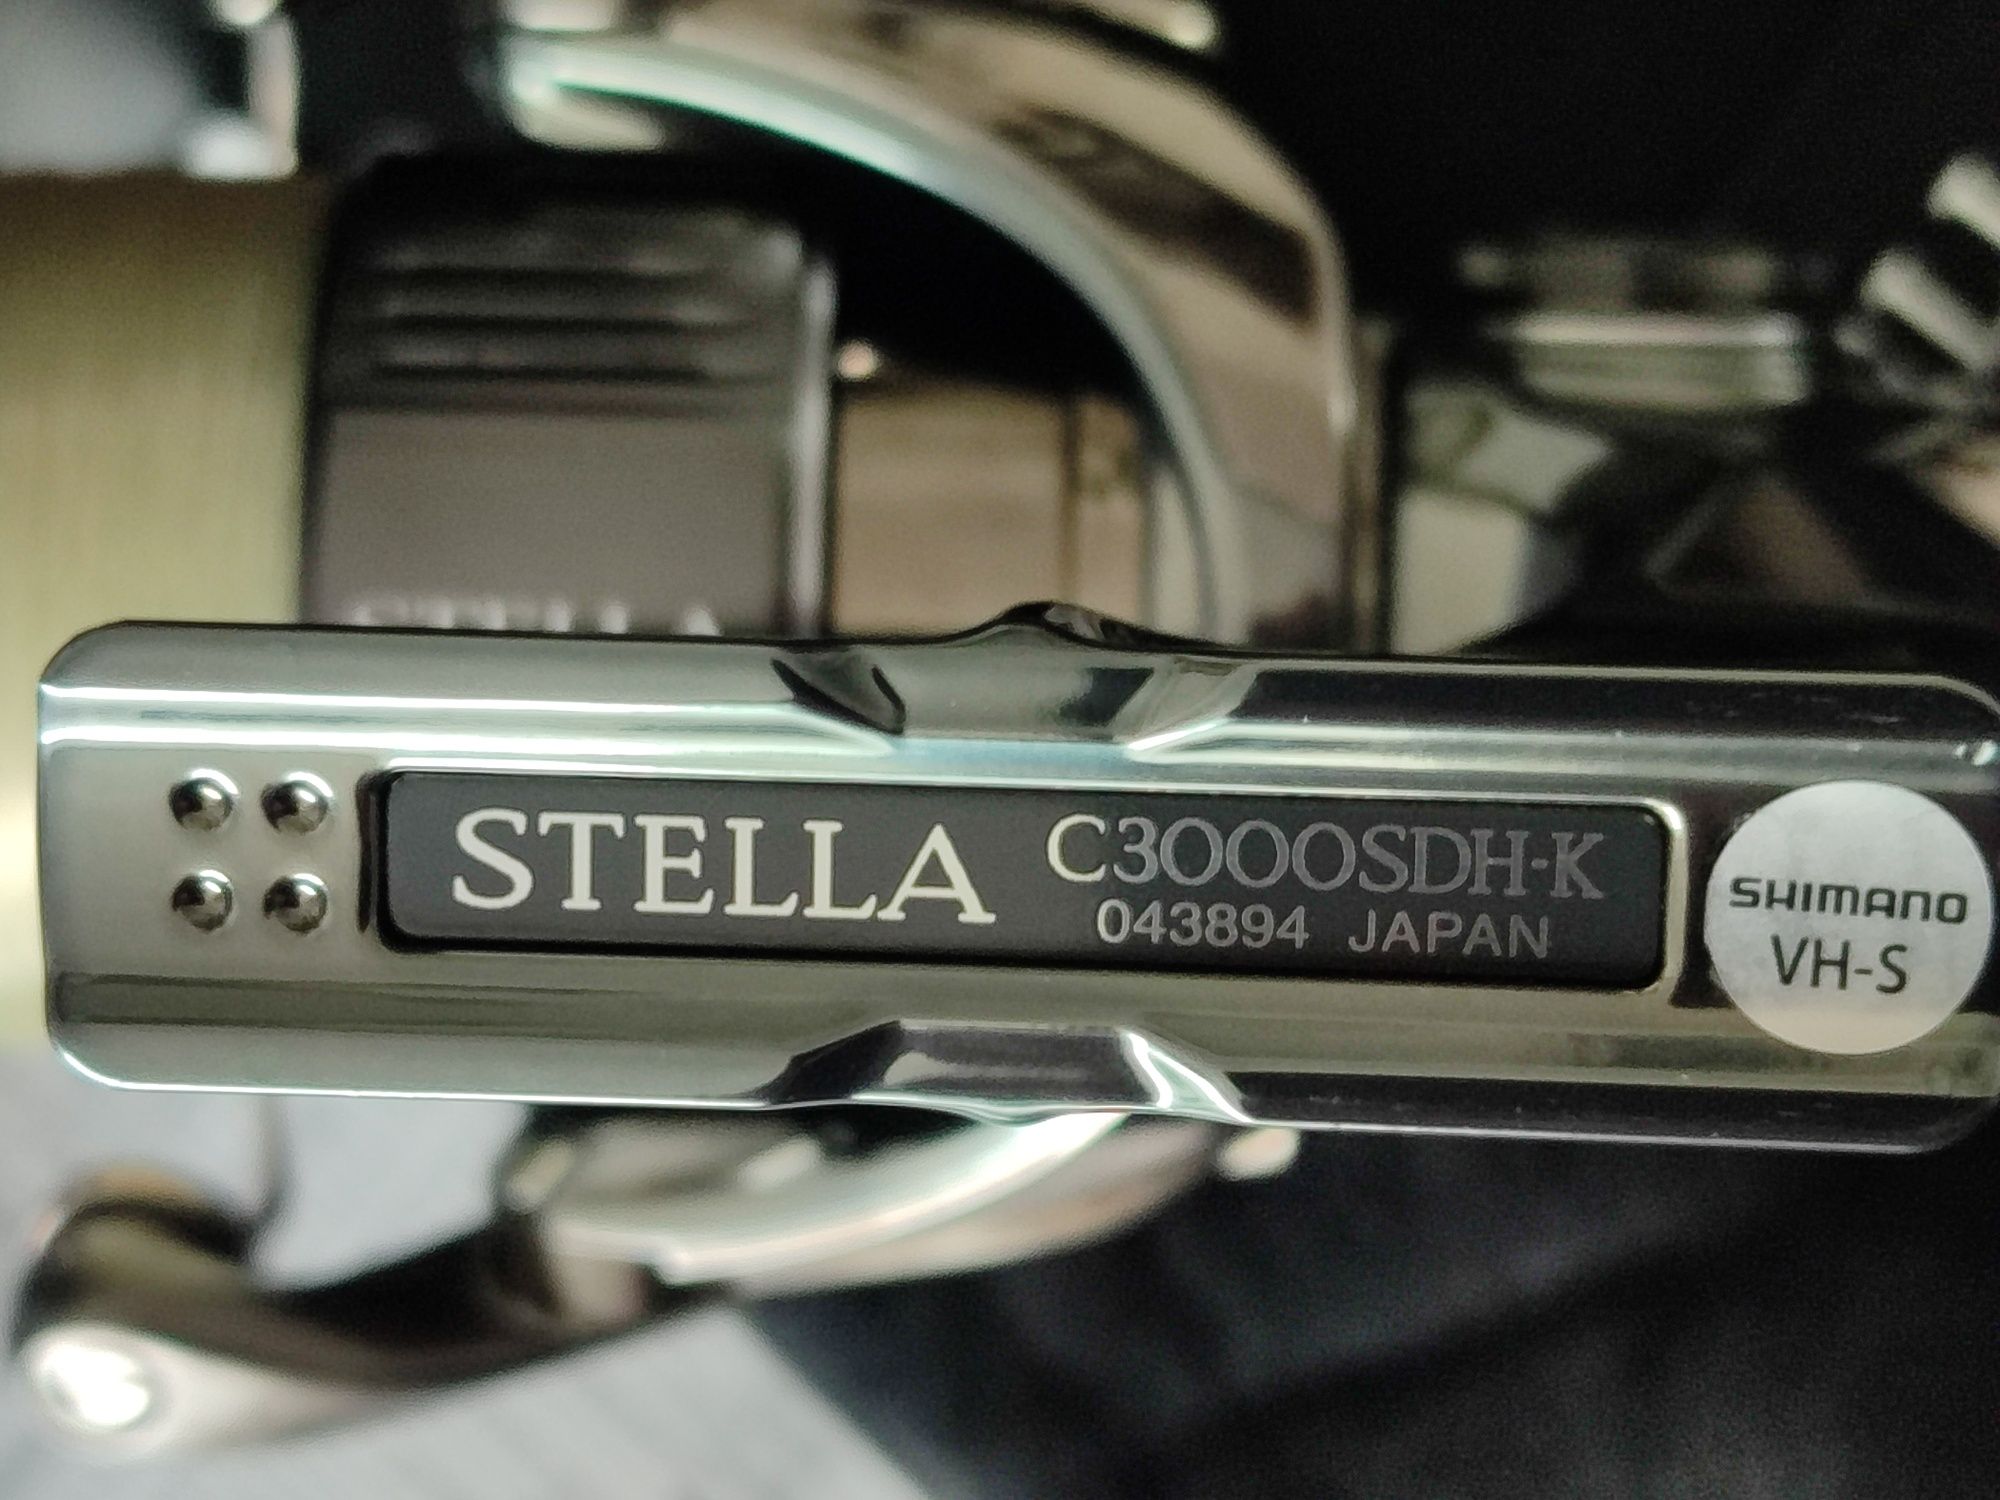 Shimano Stella FK C3000SDH.